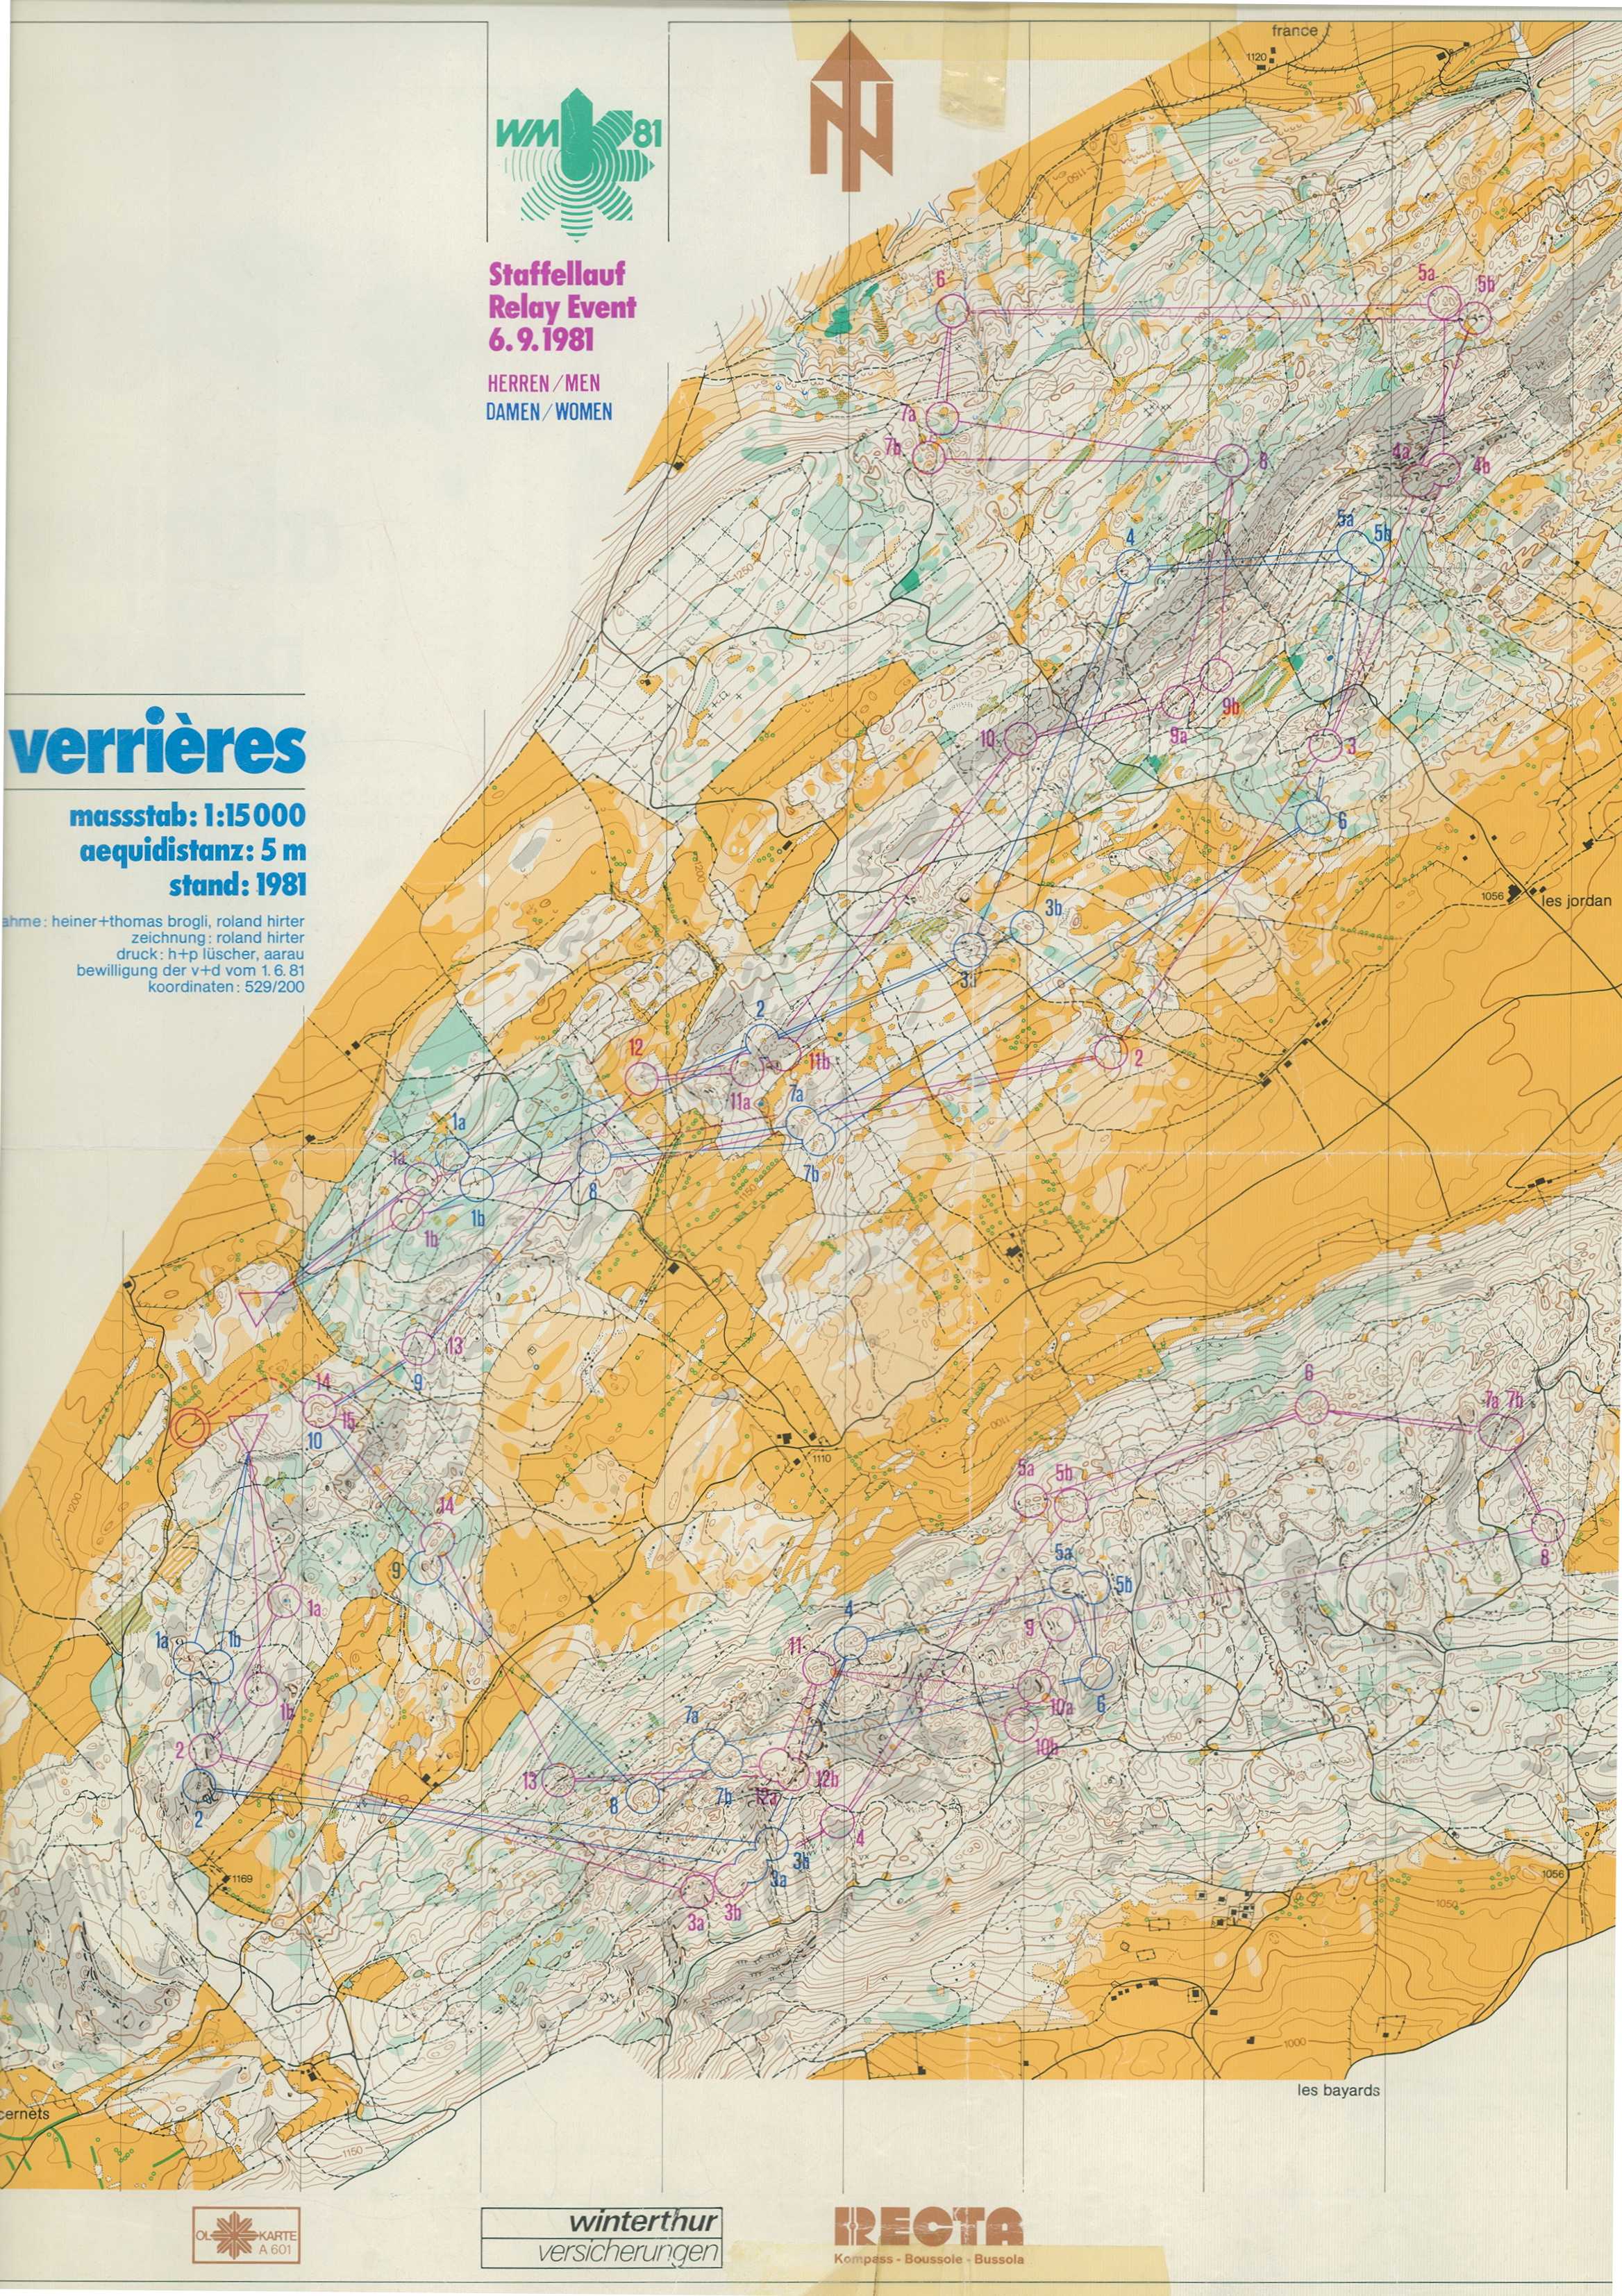 WOC / VM 1981 Les Verrières (06/09/1981)